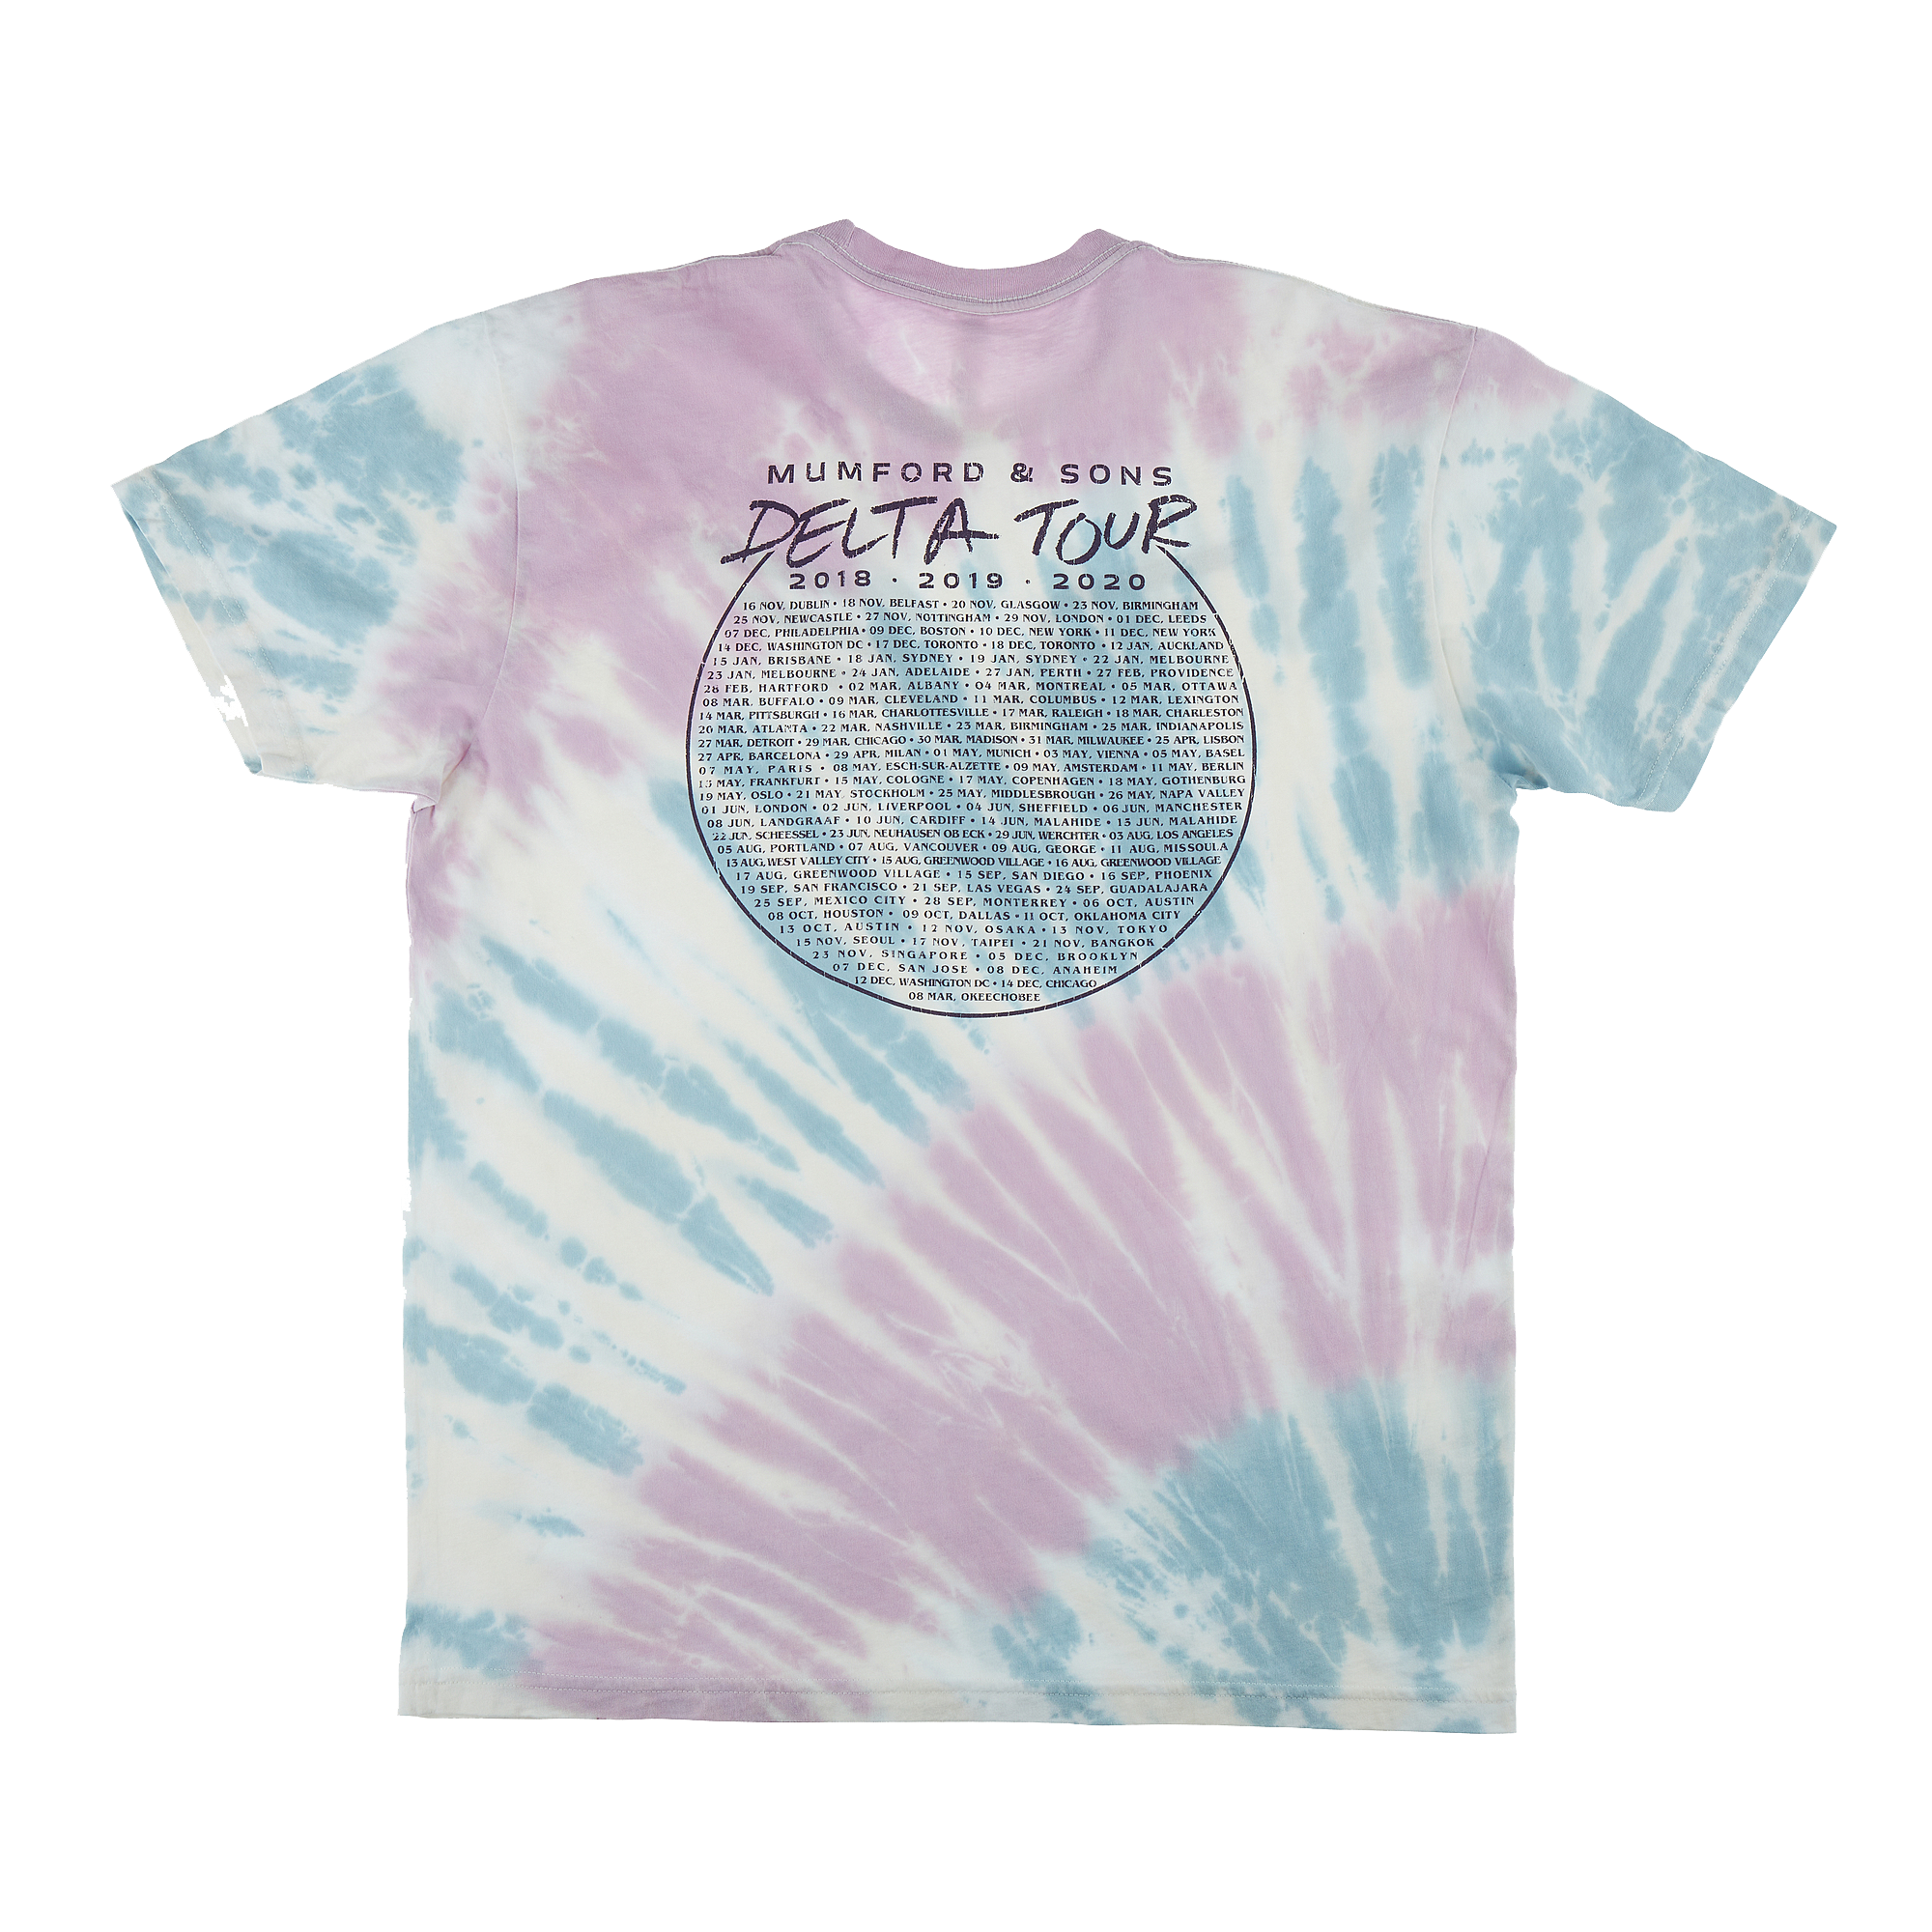 Mumford & Sons  - Pink & Blue Tie Dye Delta Tour Print T-shirt 